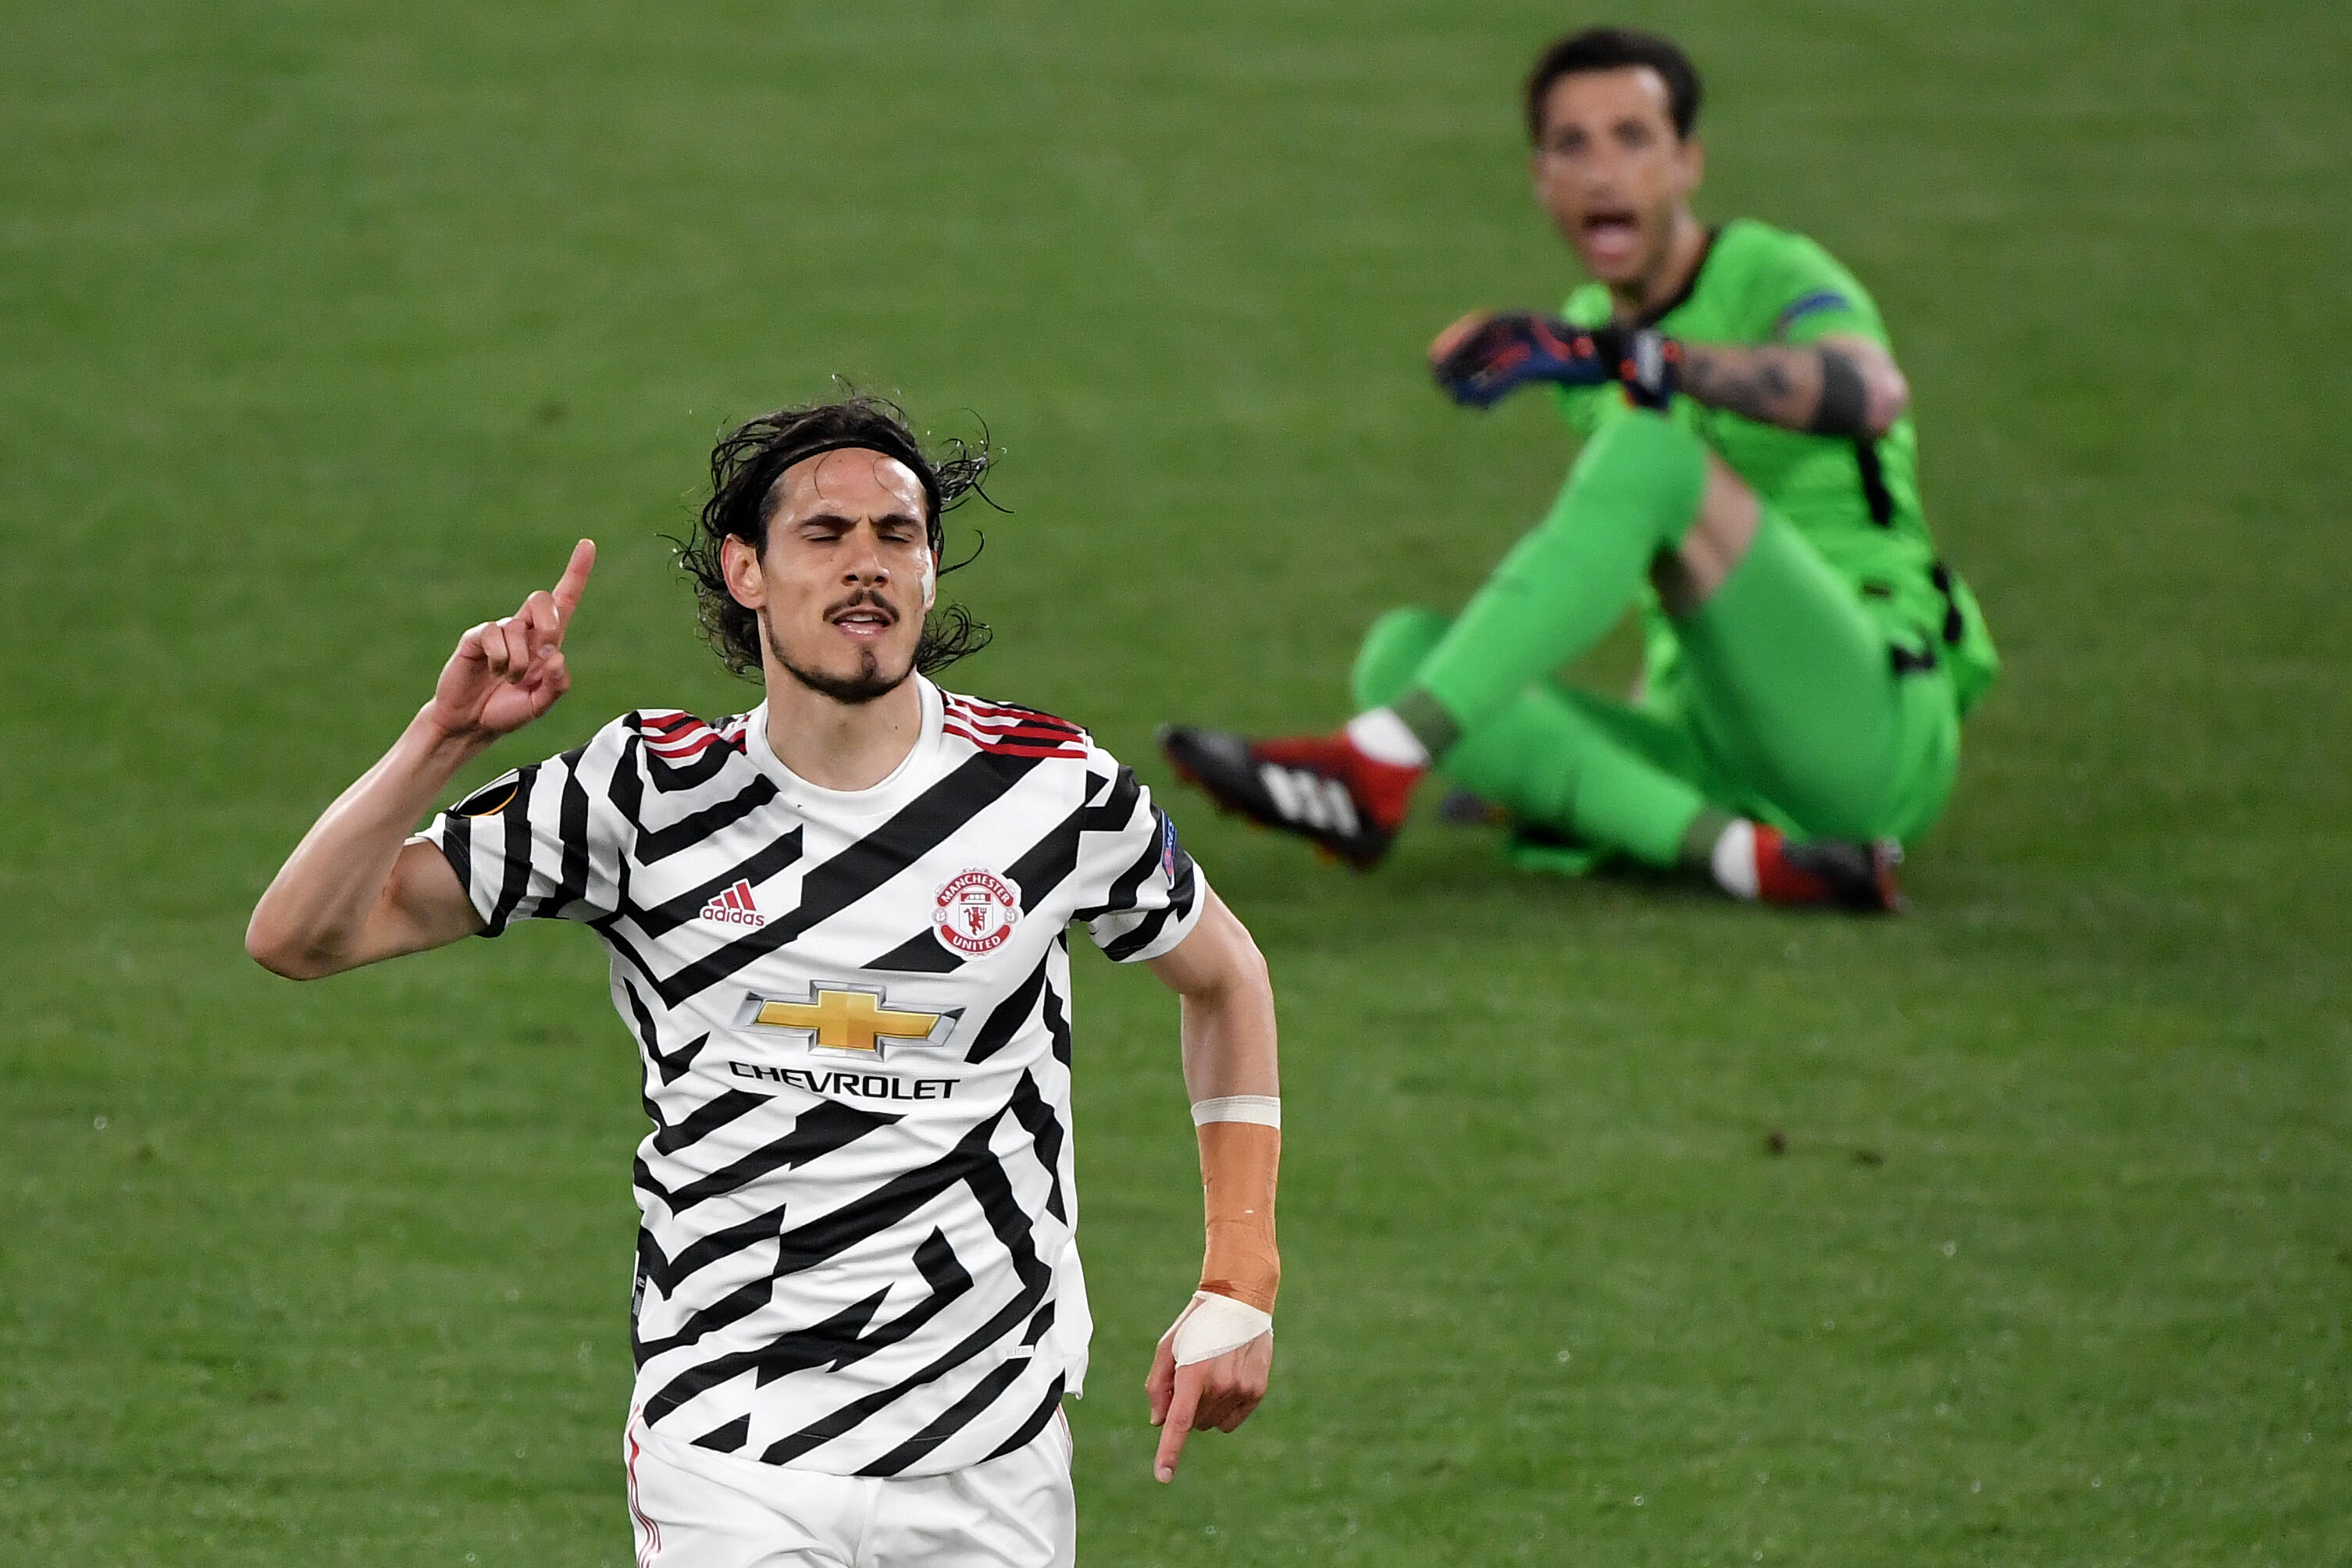 Edinson Cavani Of Manchester United, Manu Celebrates, While Antonio Mirante Of As Roma React, After Scoring The Goal Of